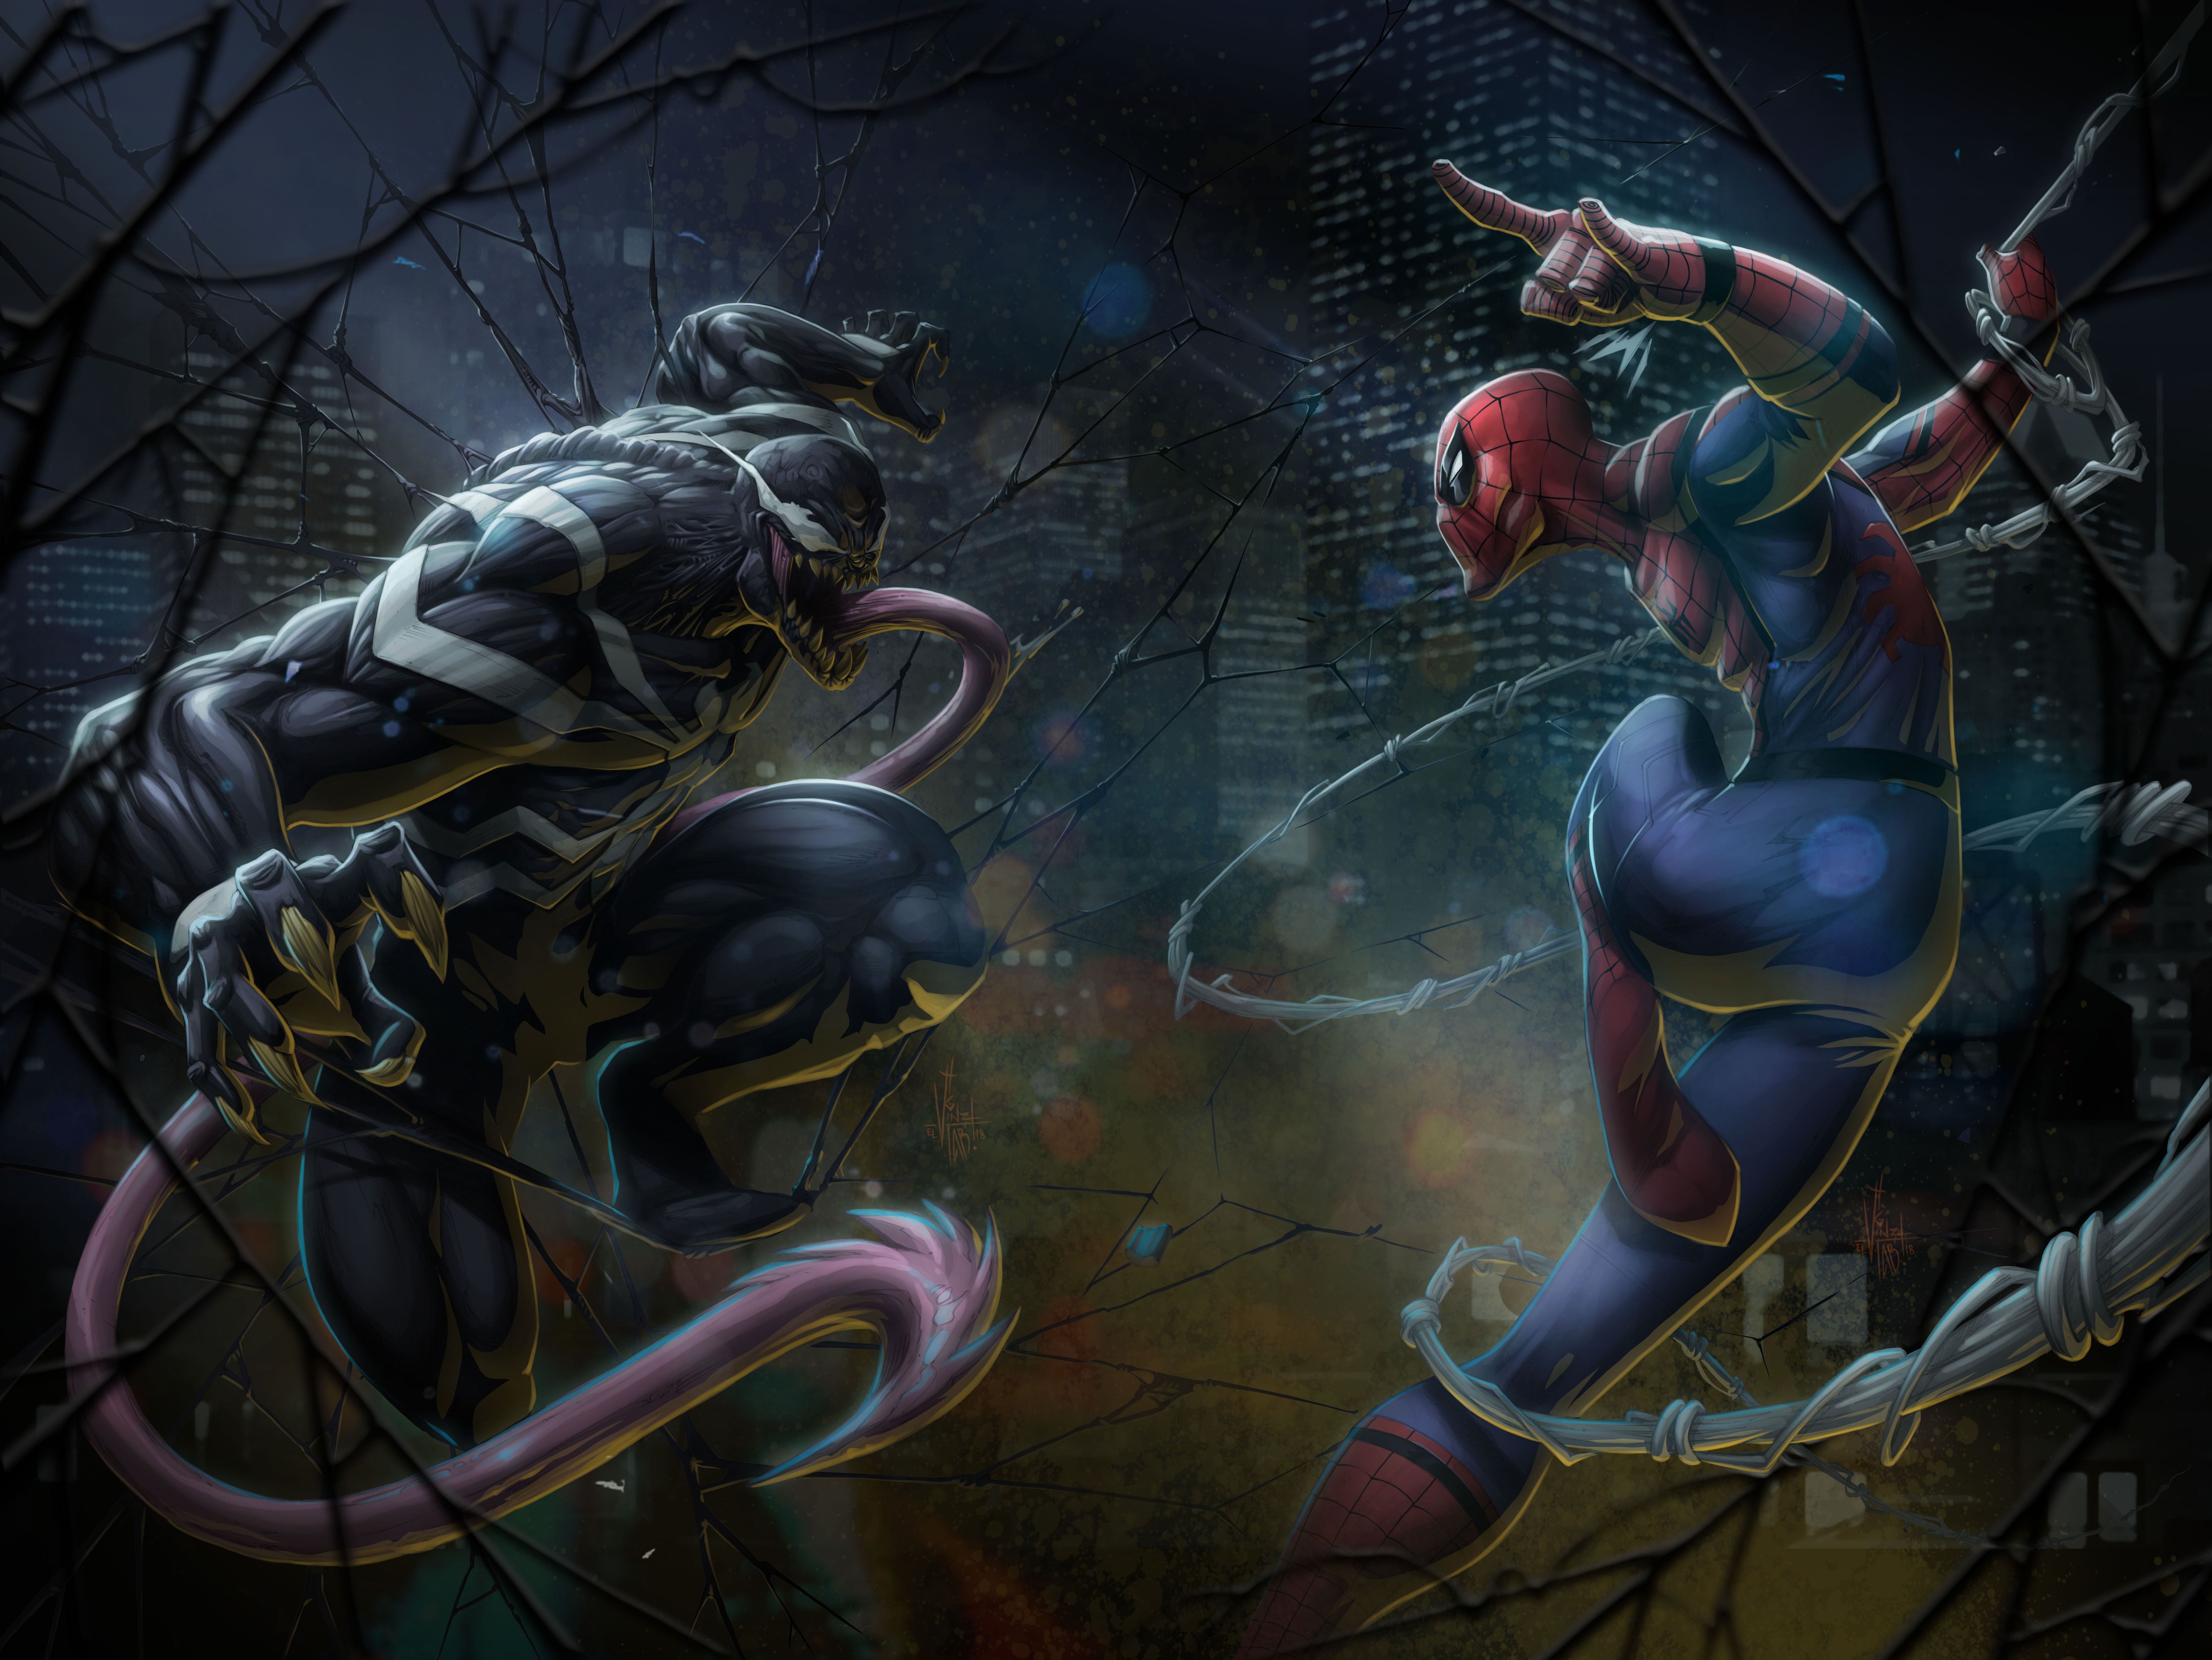 Comics Spider-Man 4k Ultra HD Wallpaper by Vinz-el-Tabanas